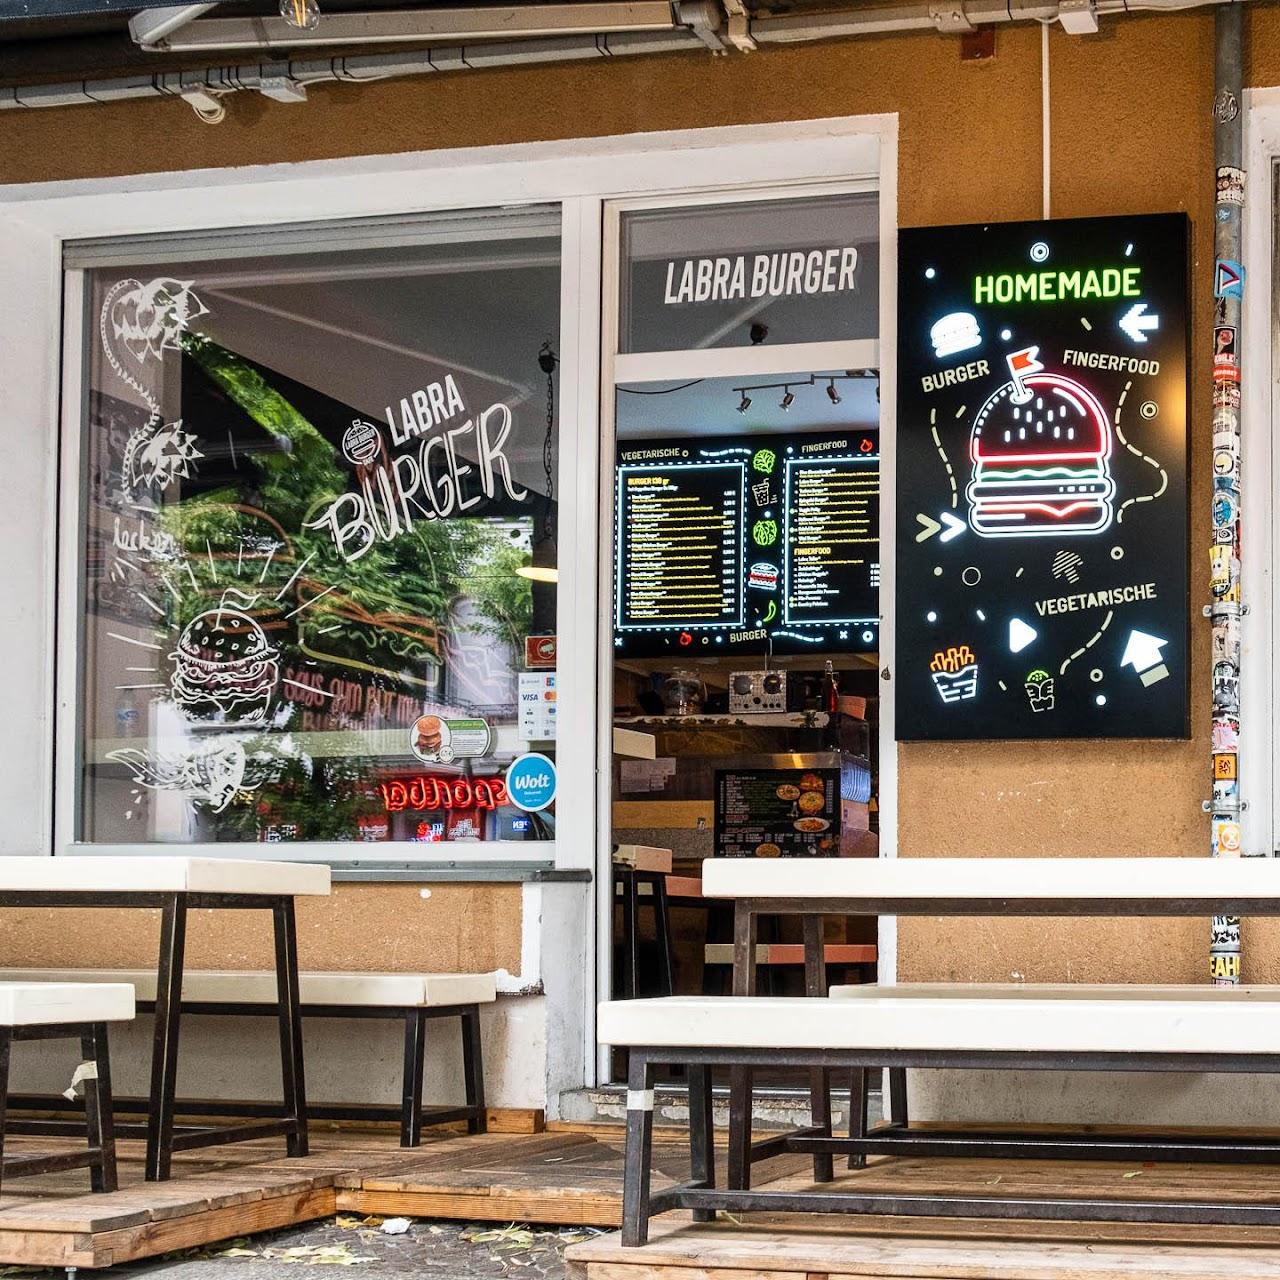 Restaurant "LABRA Burger" in Berlin